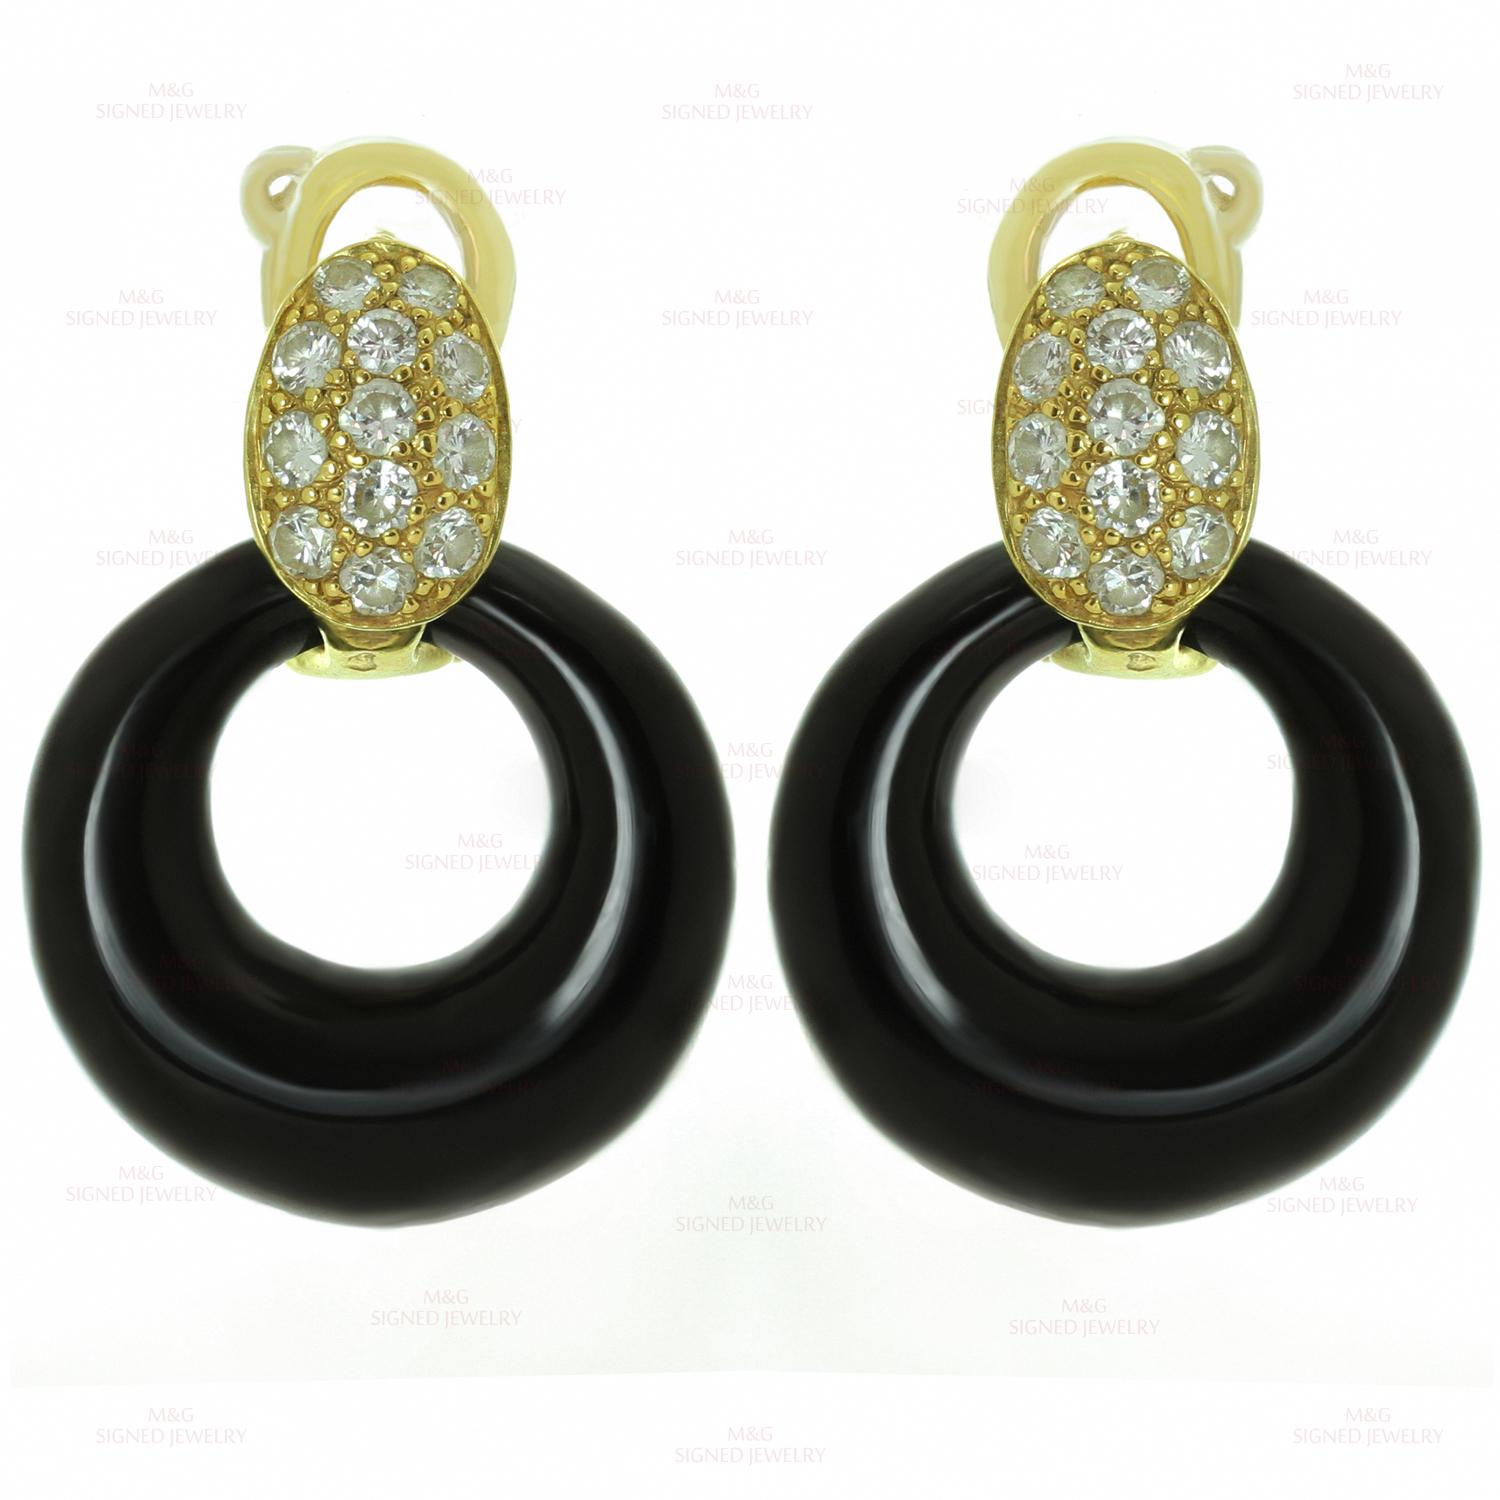 Brilliant Cut Van Cleef & Arpels Diamond Gemstone Yellow Gold Interchangeable Earrings